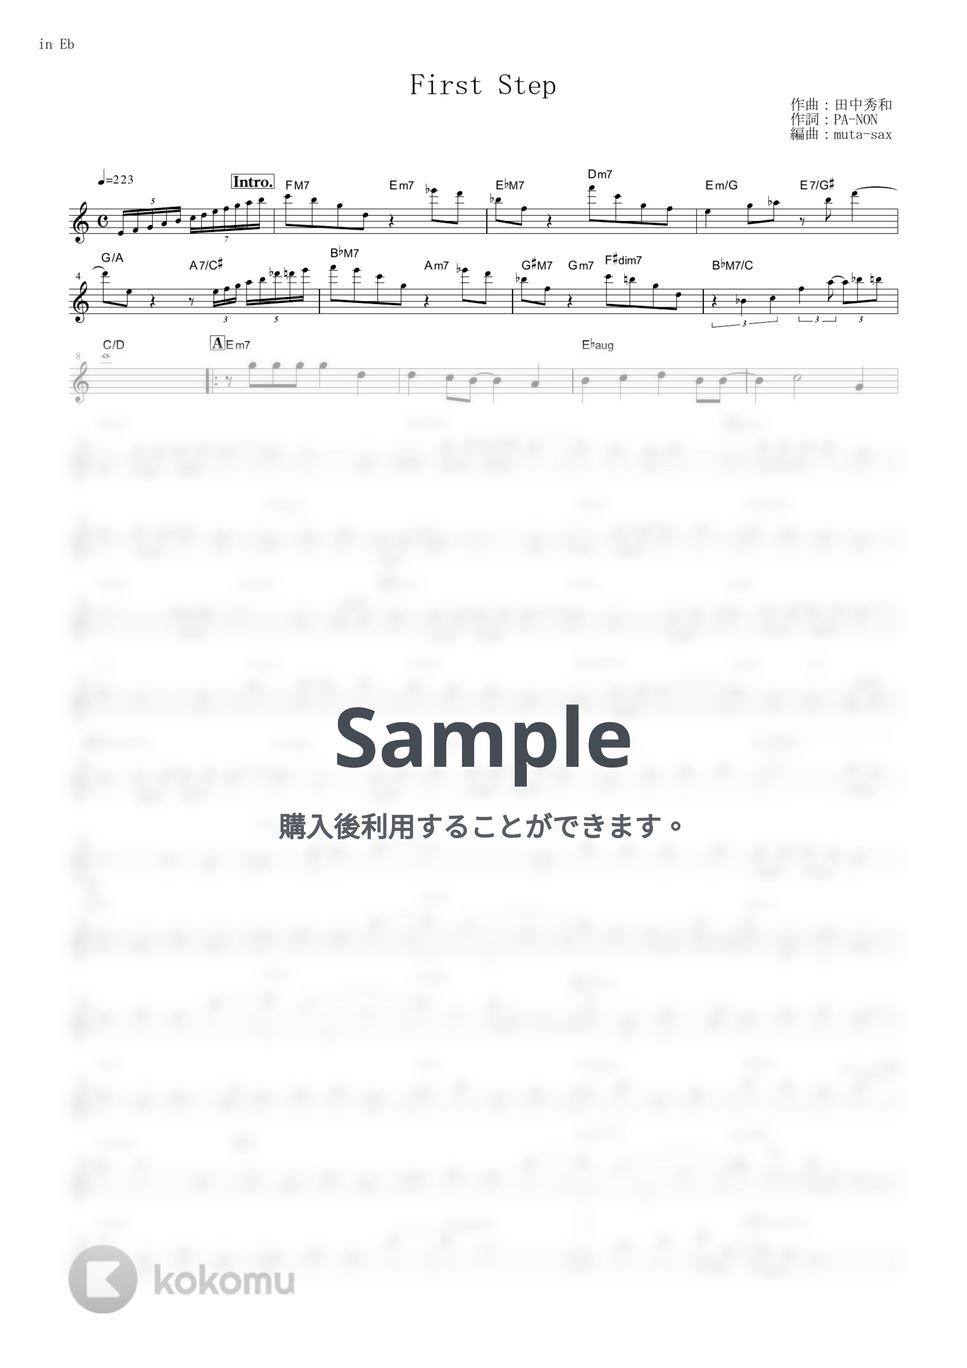 長瀬麻奈（CV:神田沙也加） - First Step (『IDOLY PRIDE』 / in Eb) by muta-sax